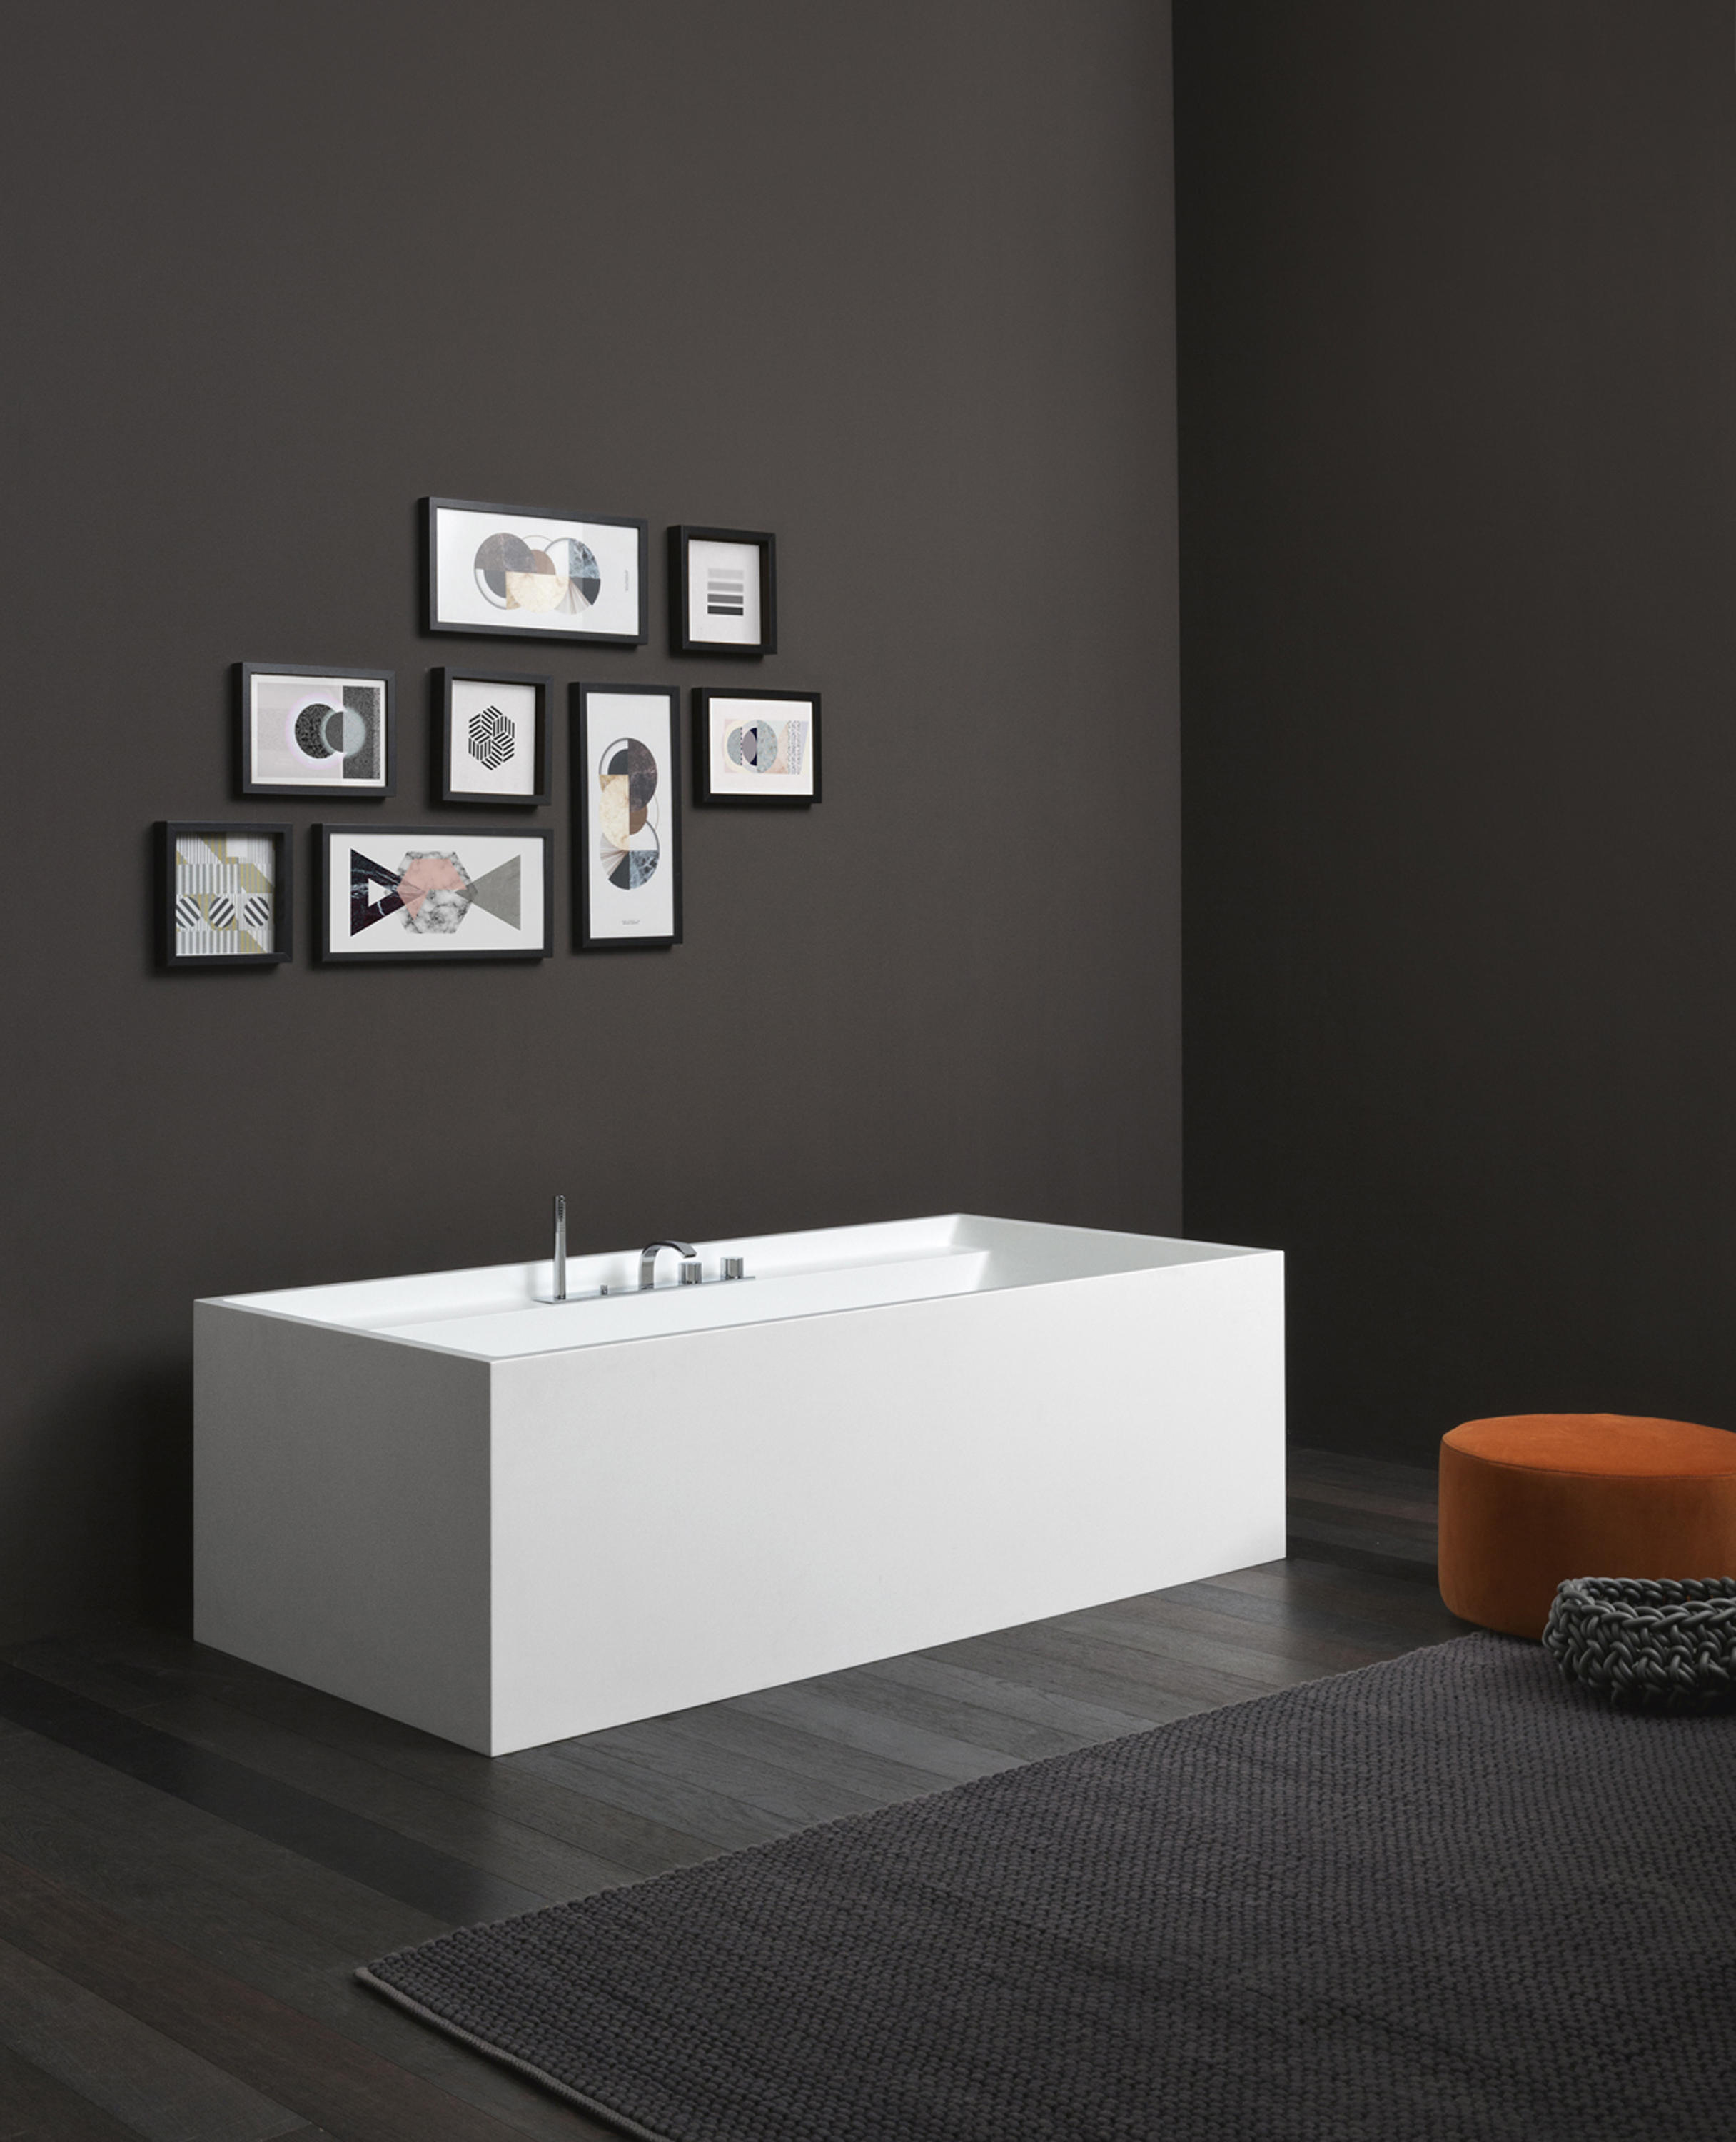 Pool Maxi bathtube & designer furniture | Architonic